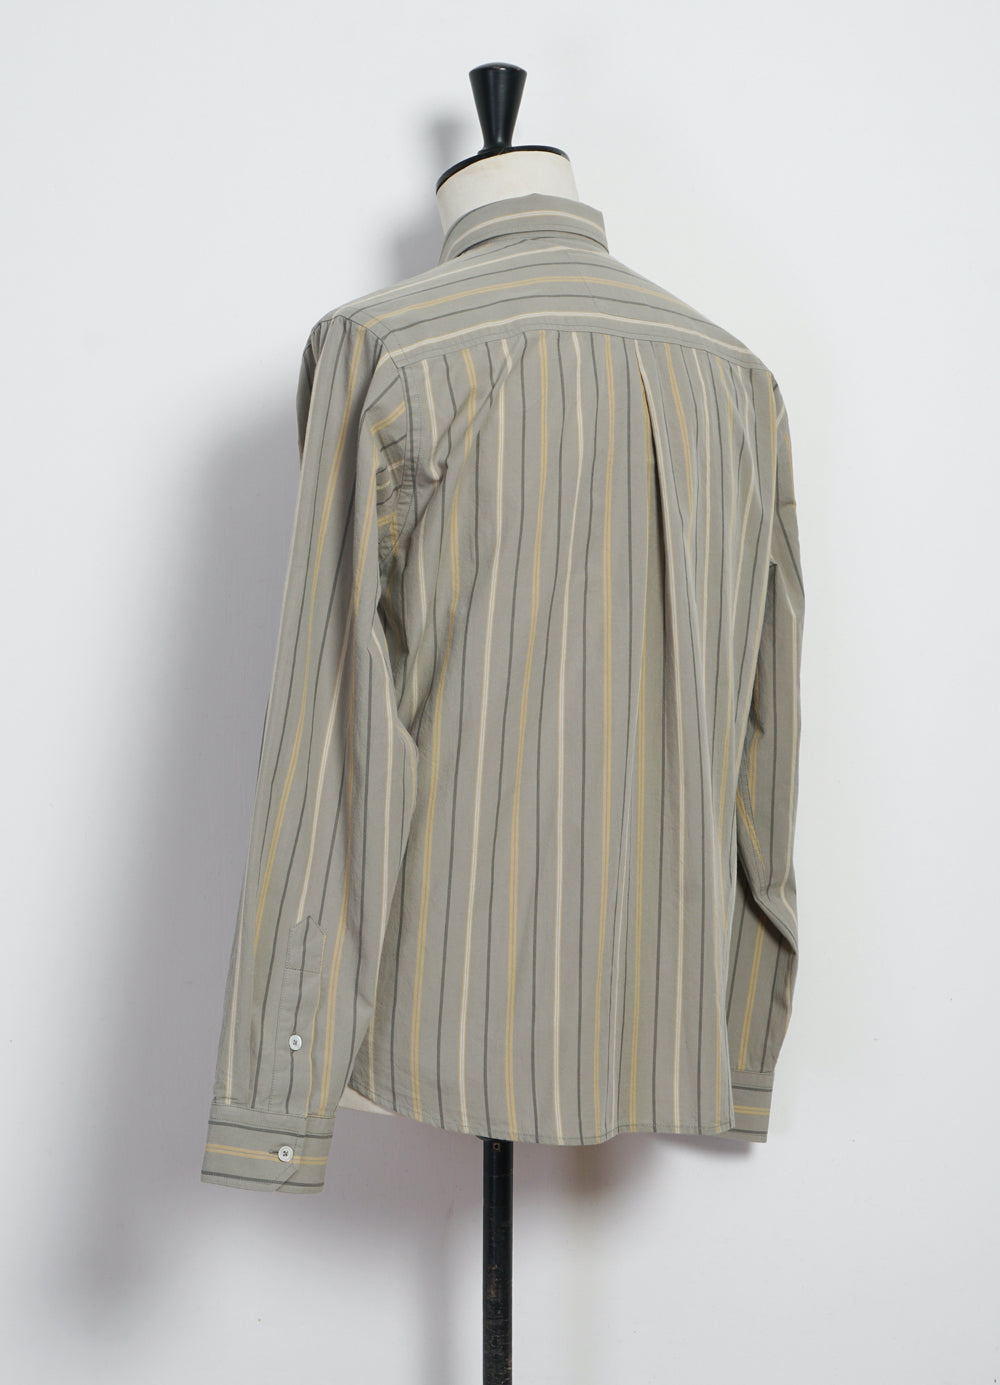 RAYMOND | Relaxed Classic Shirt | Khaki Stripes